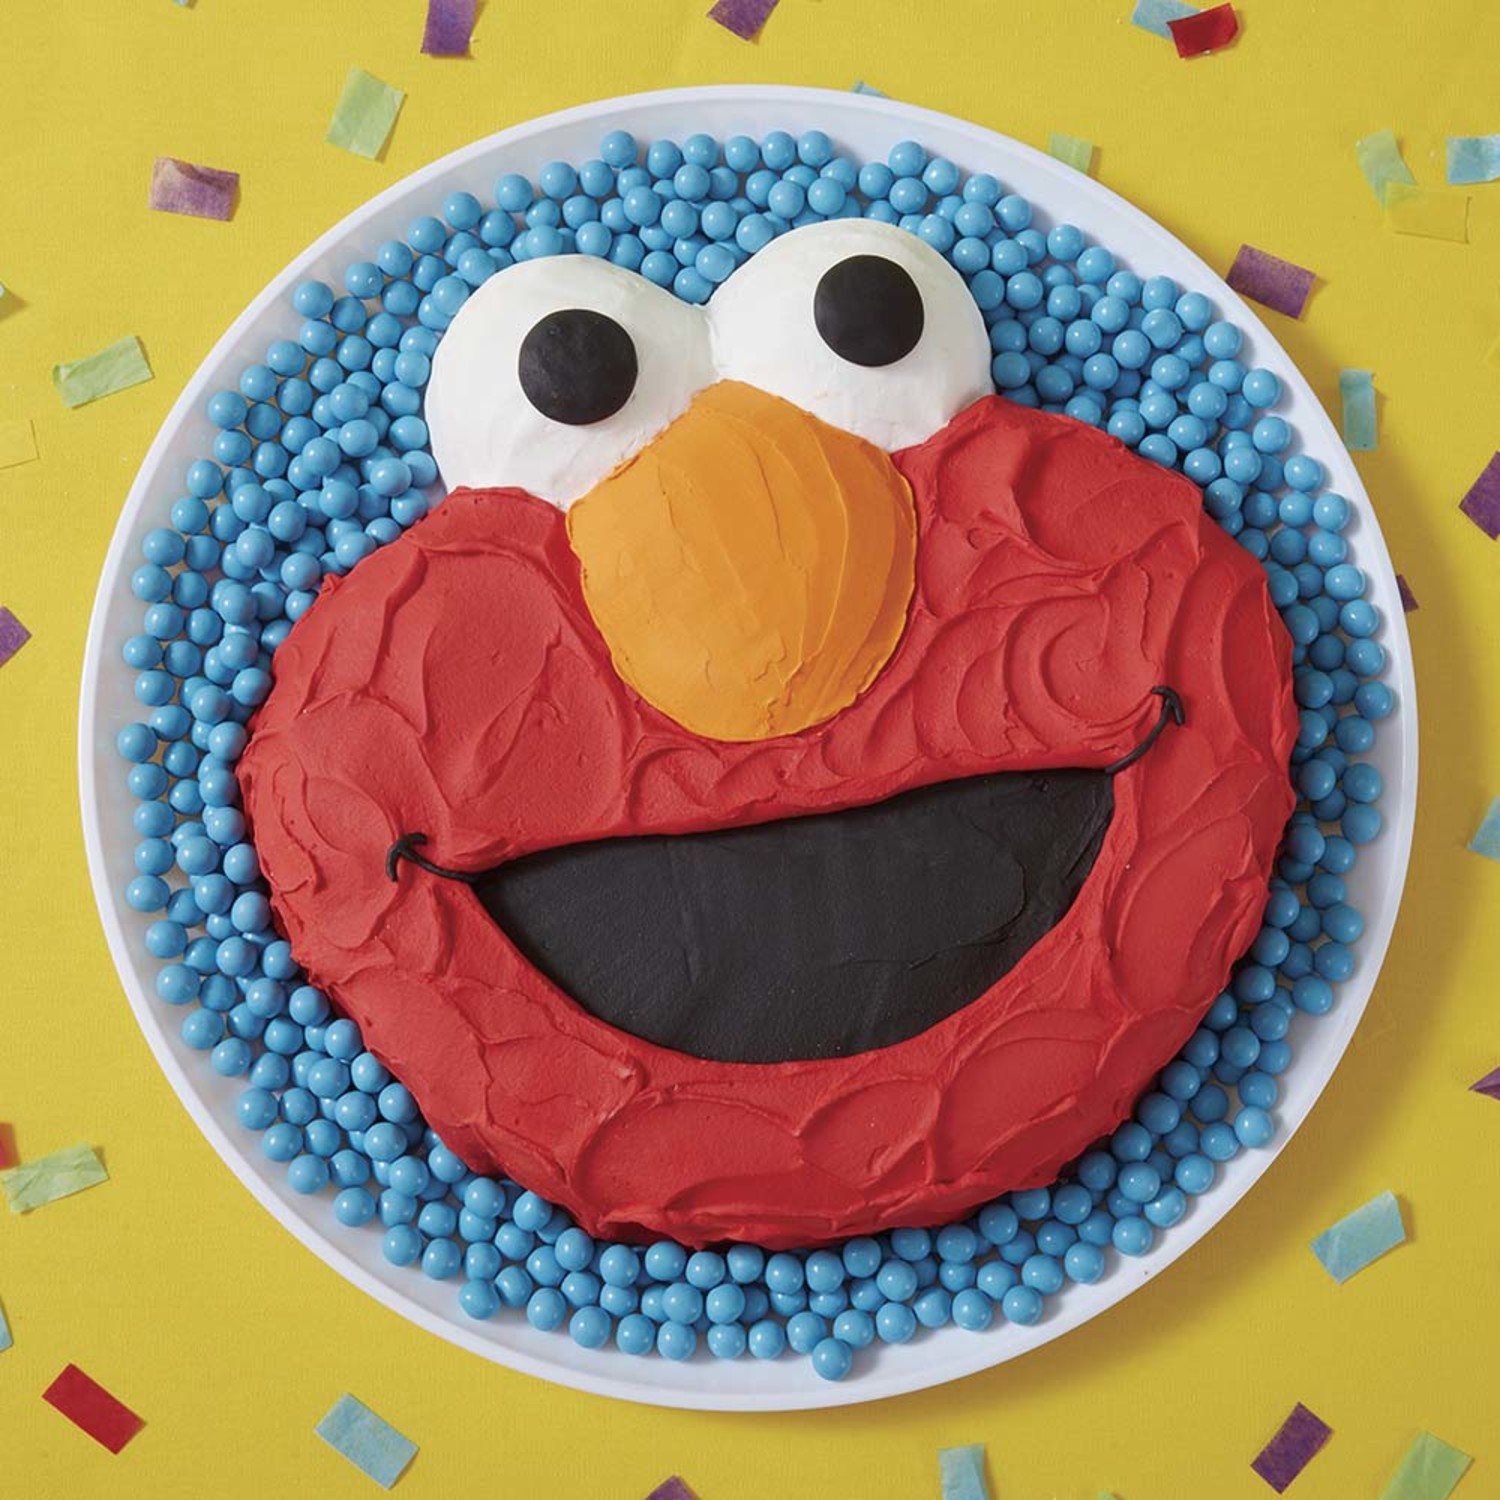 Elmo Face Cake | The SweetSide